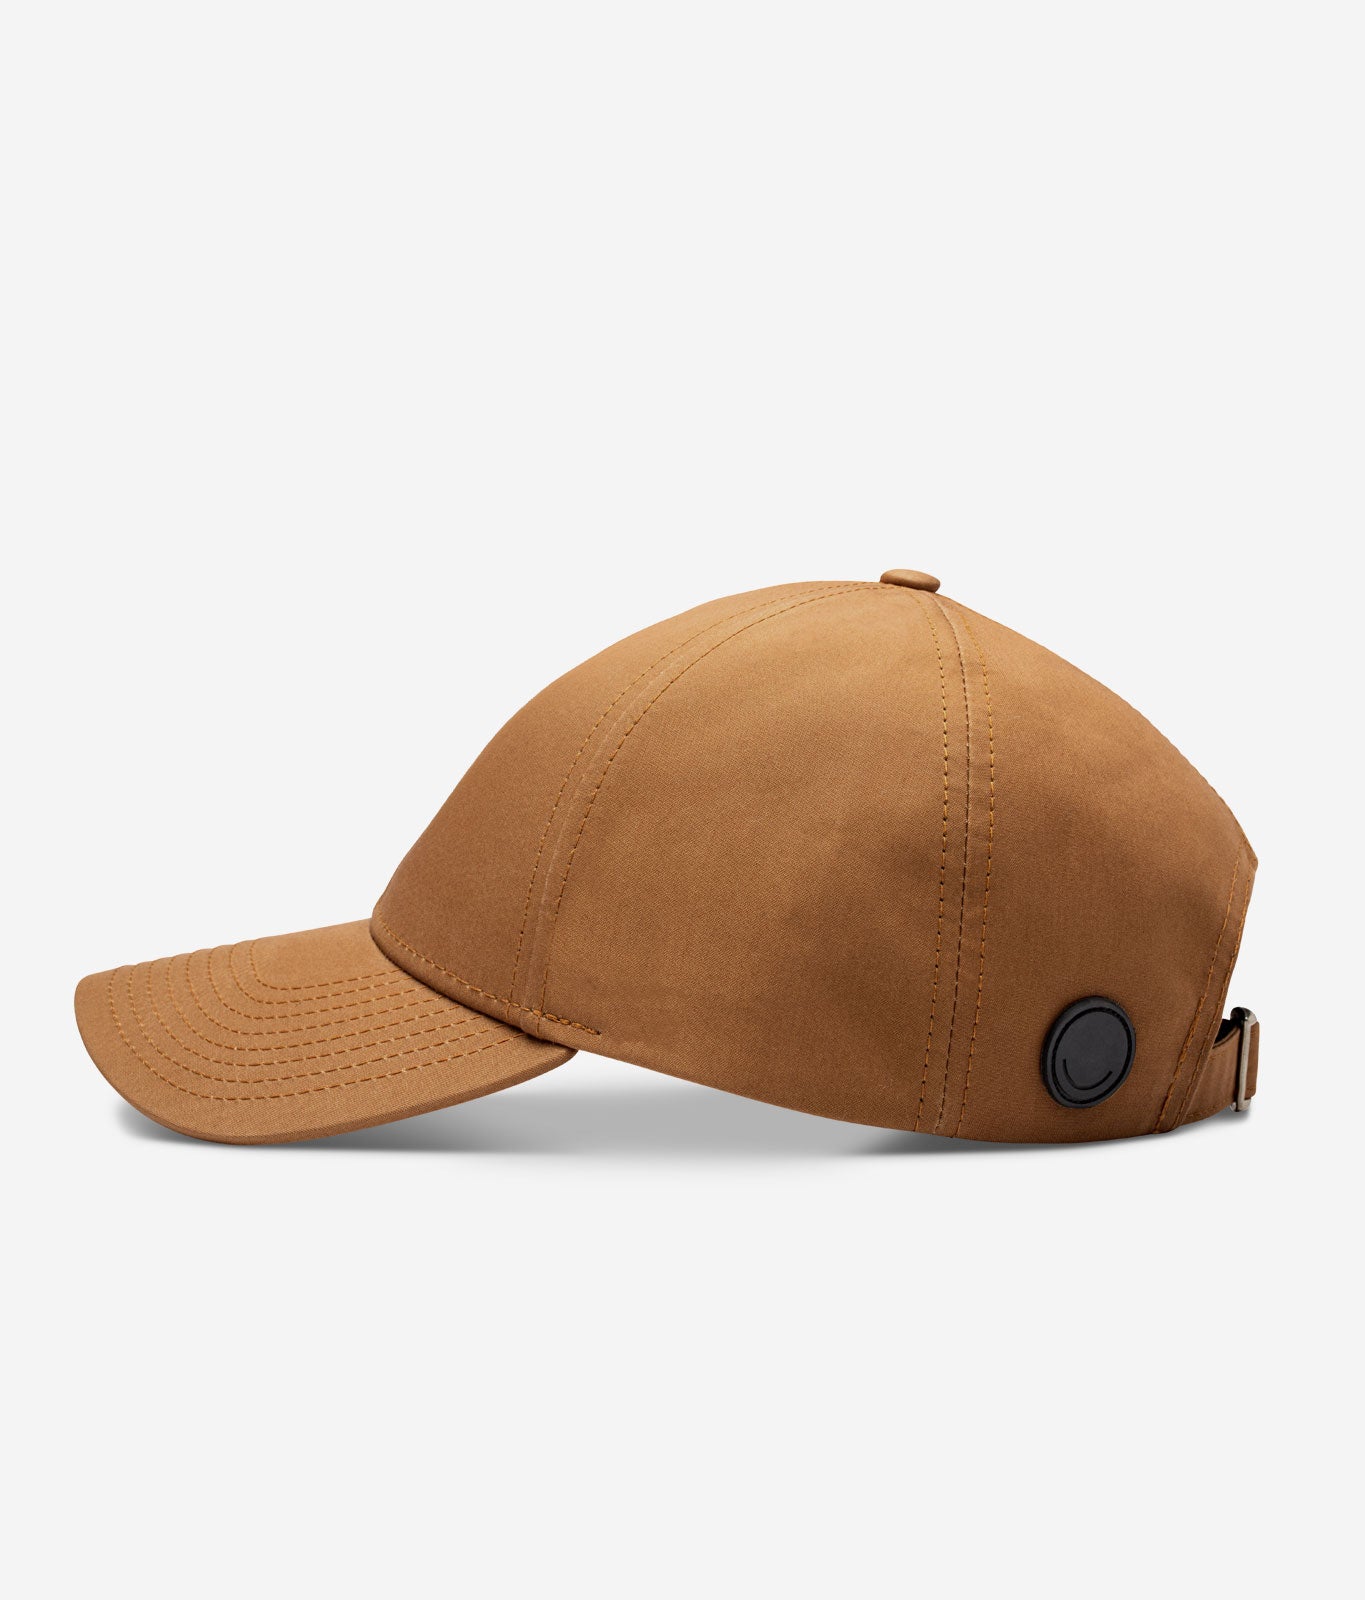 Stiksen | Premium baseball caps for men and women | Quality headwear